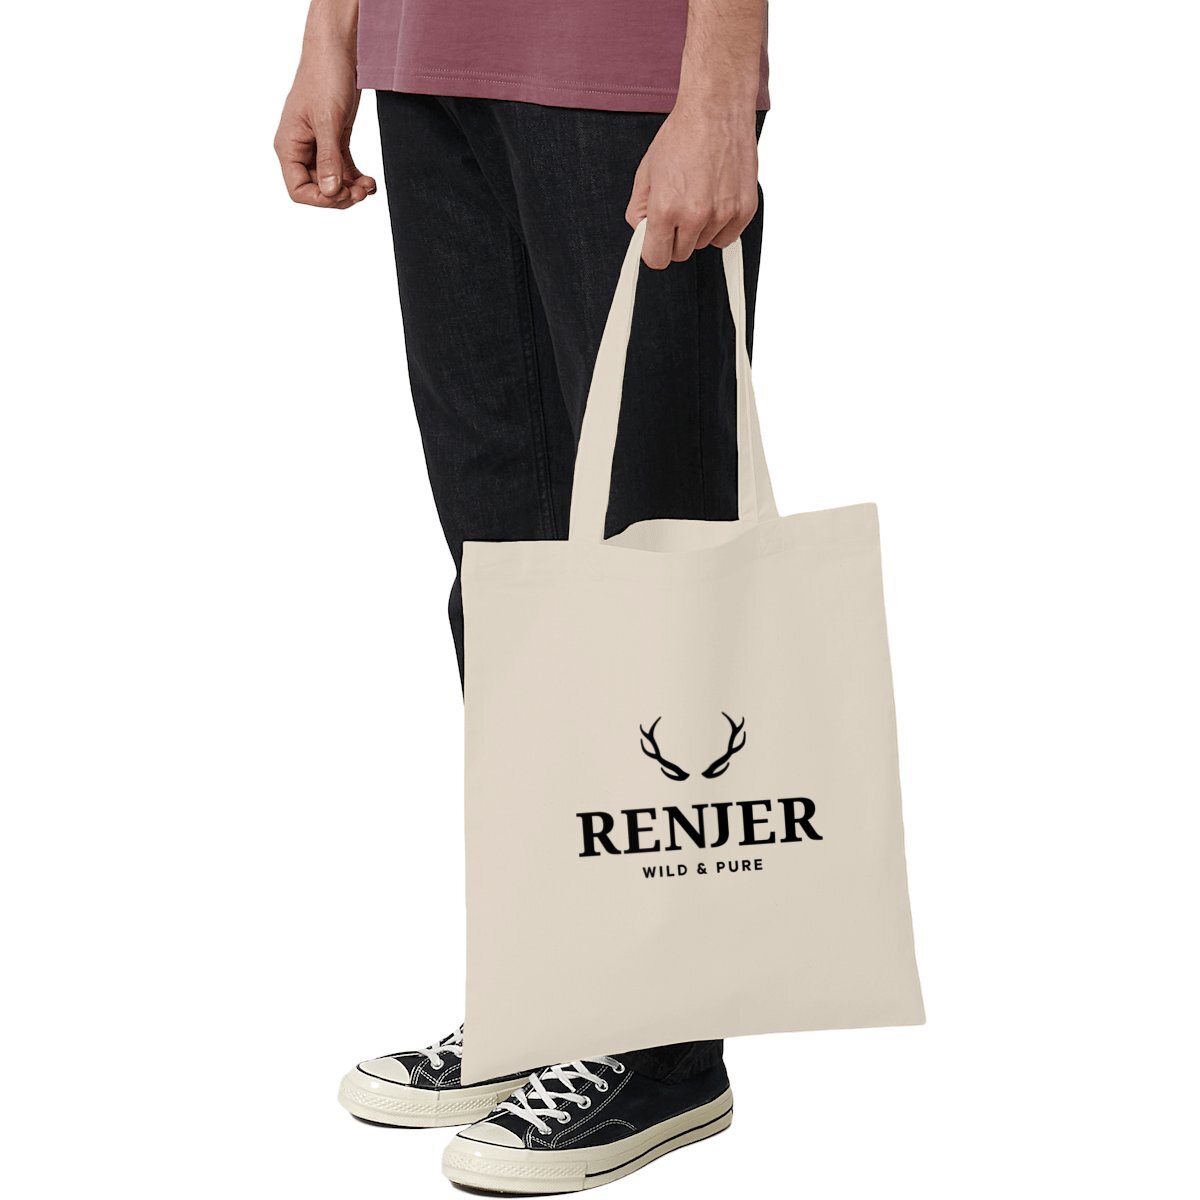 Renjer Tote Bag